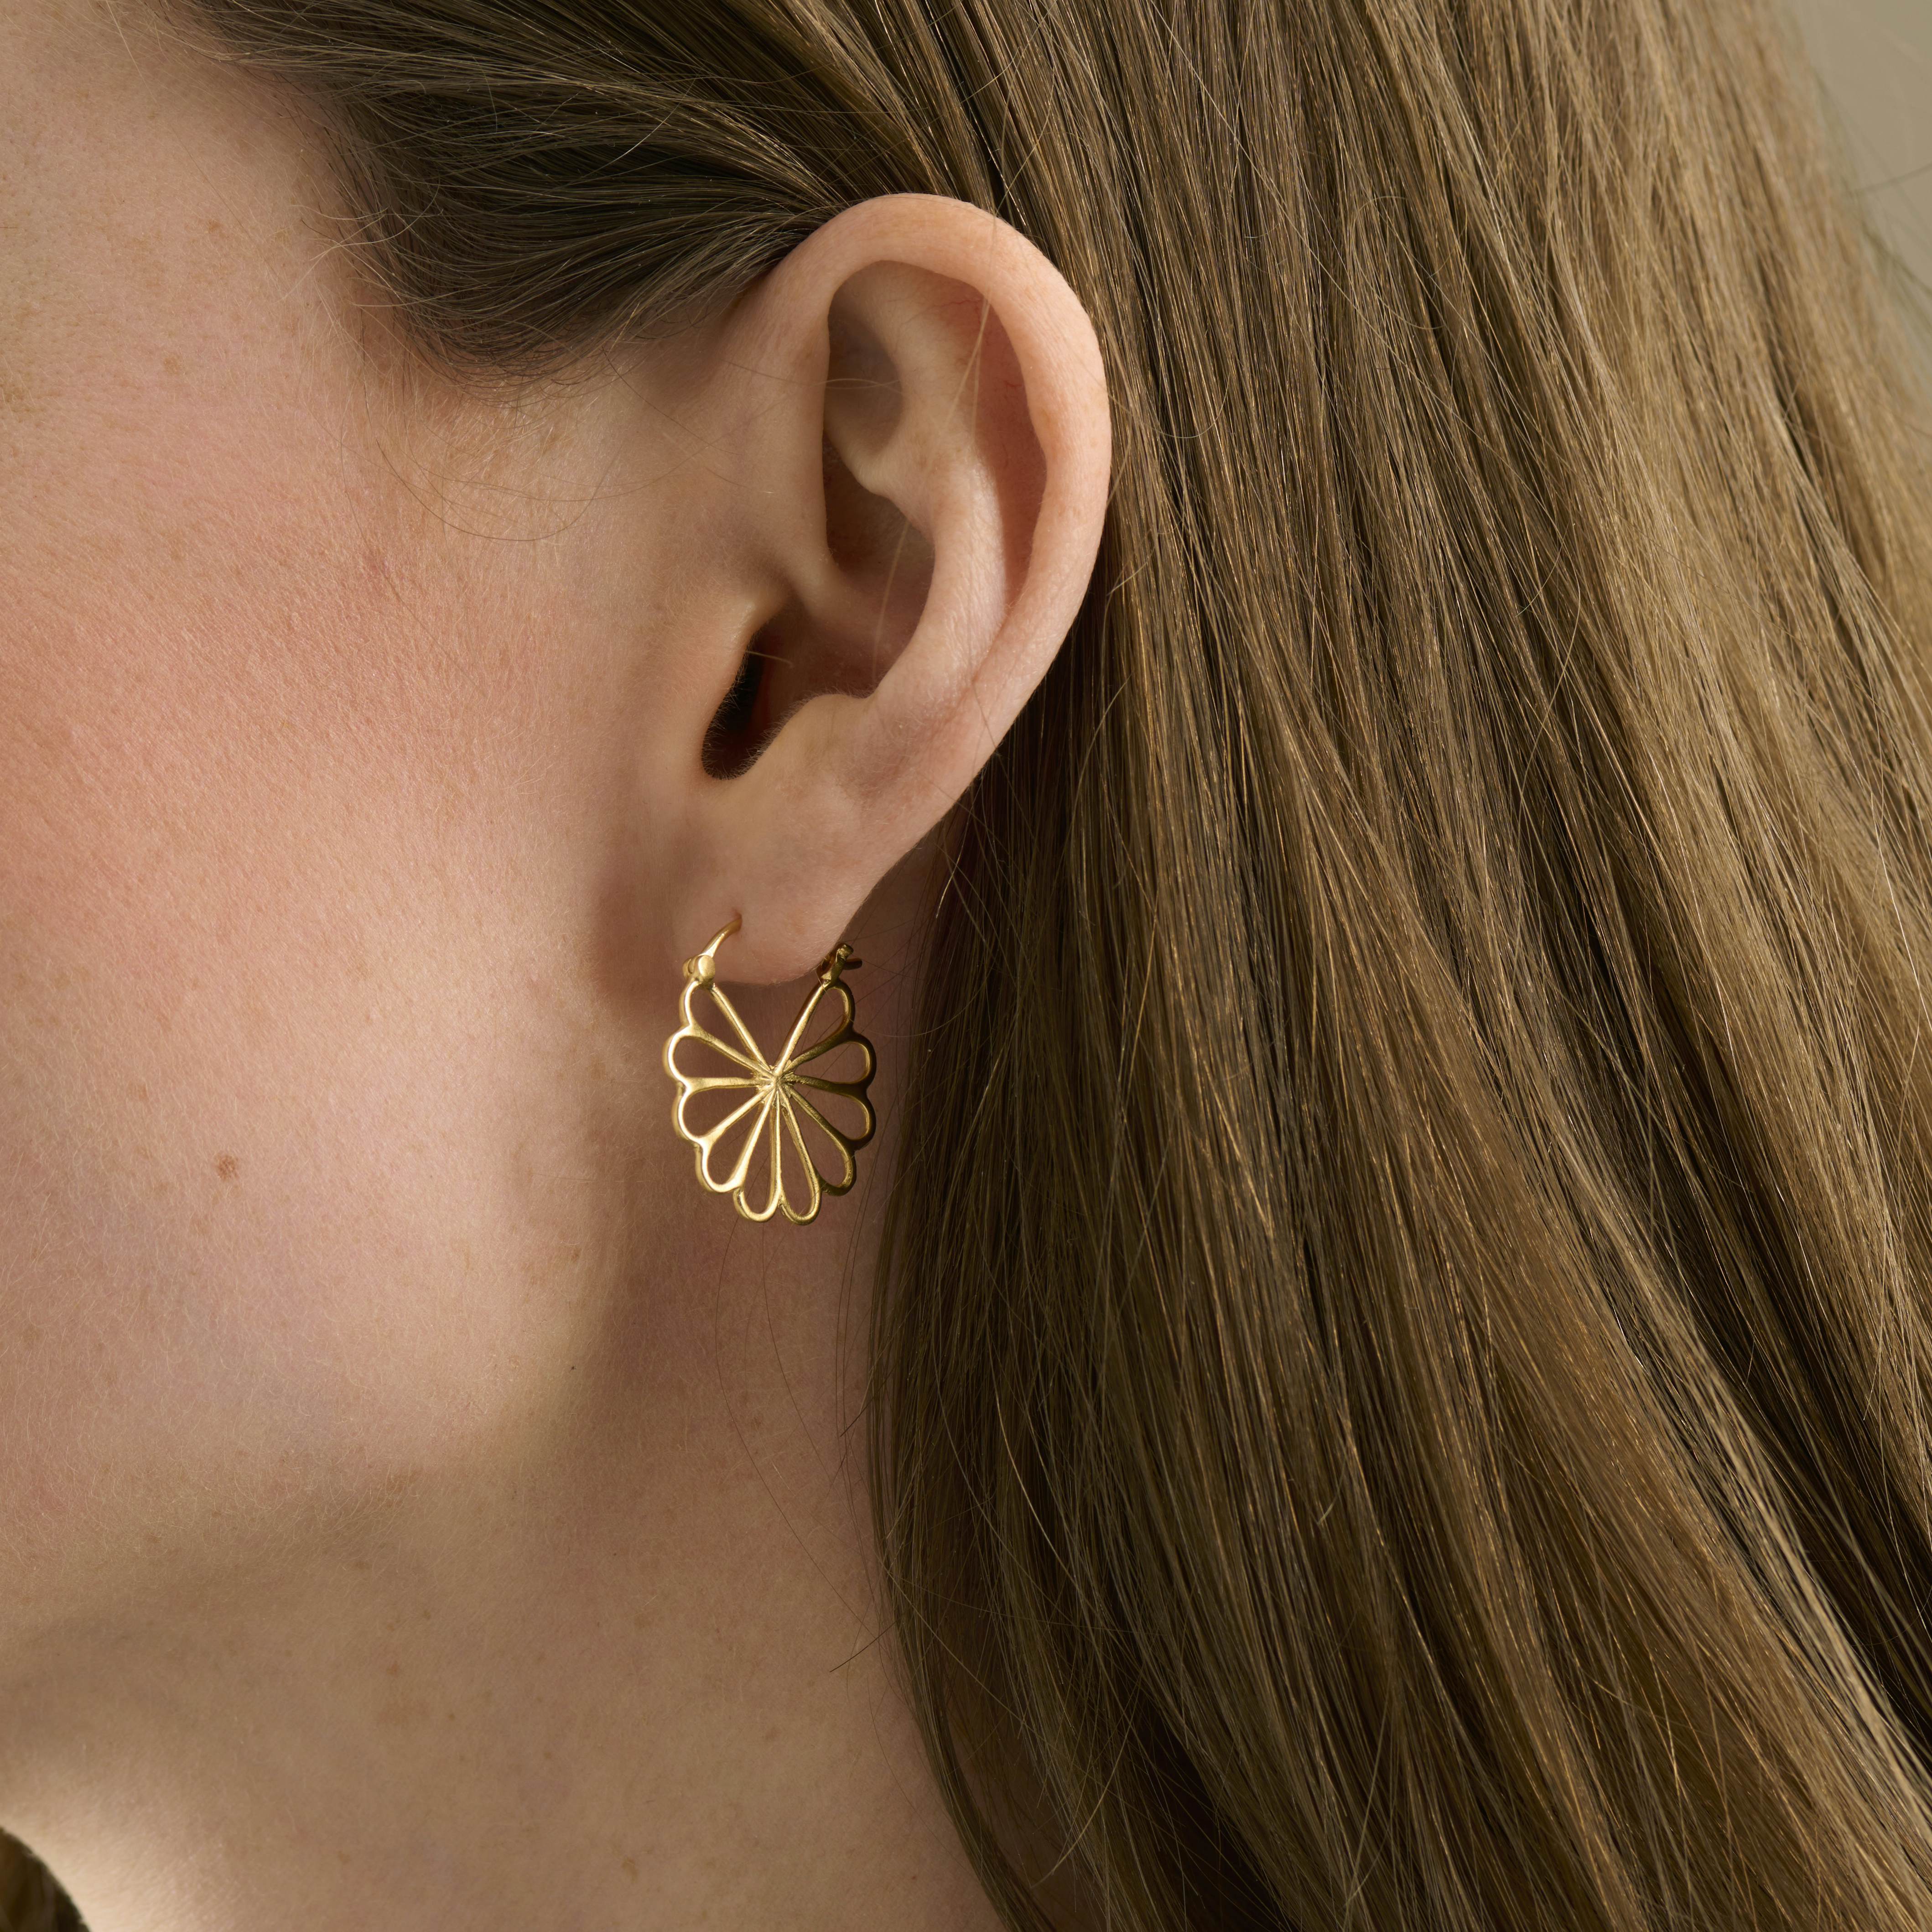 Bellis Earrings from Pernille Corydon in Goldplated-Silver Sterling 925